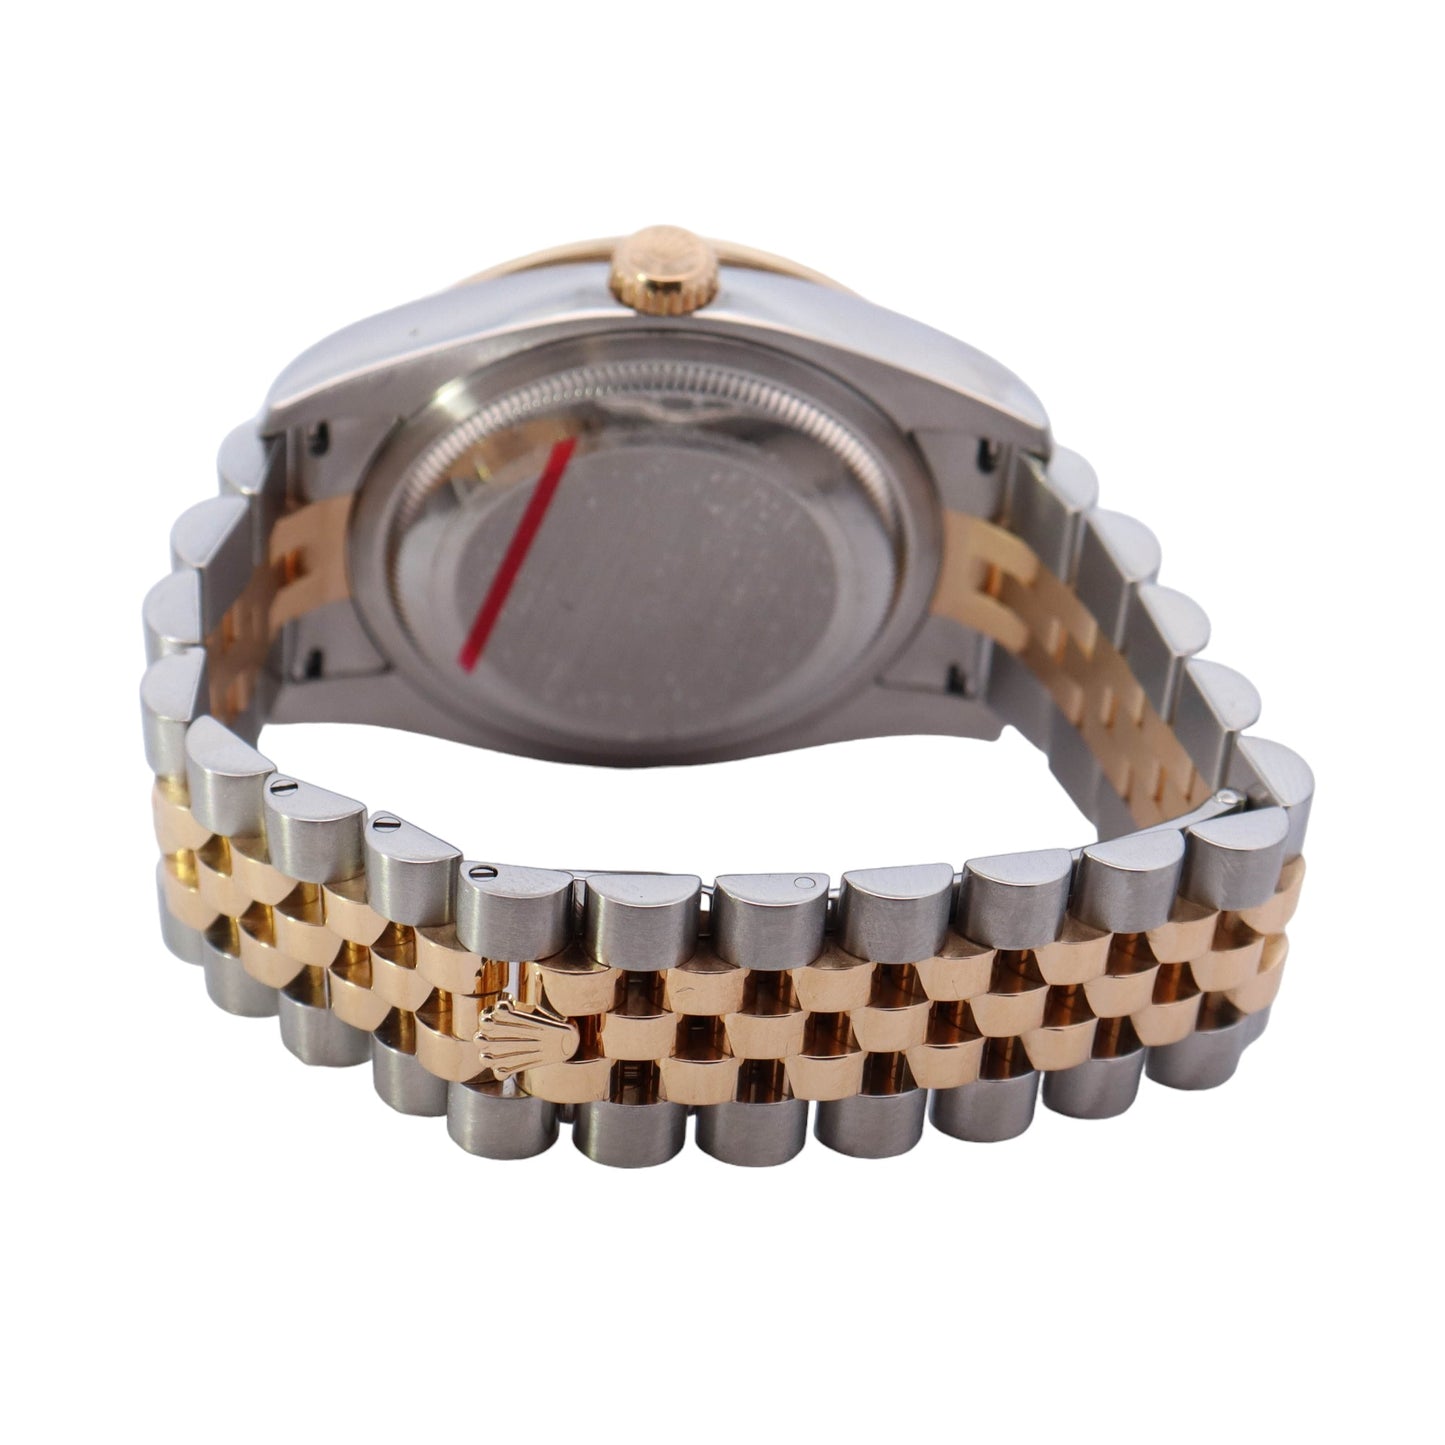 Rolex Datejust Two Tone Yellow Gold & Steel 36mm White MOP Diamond Dial Watch Reference #: 116233 - Happy Jewelers Fine Jewelry Lifetime Warranty